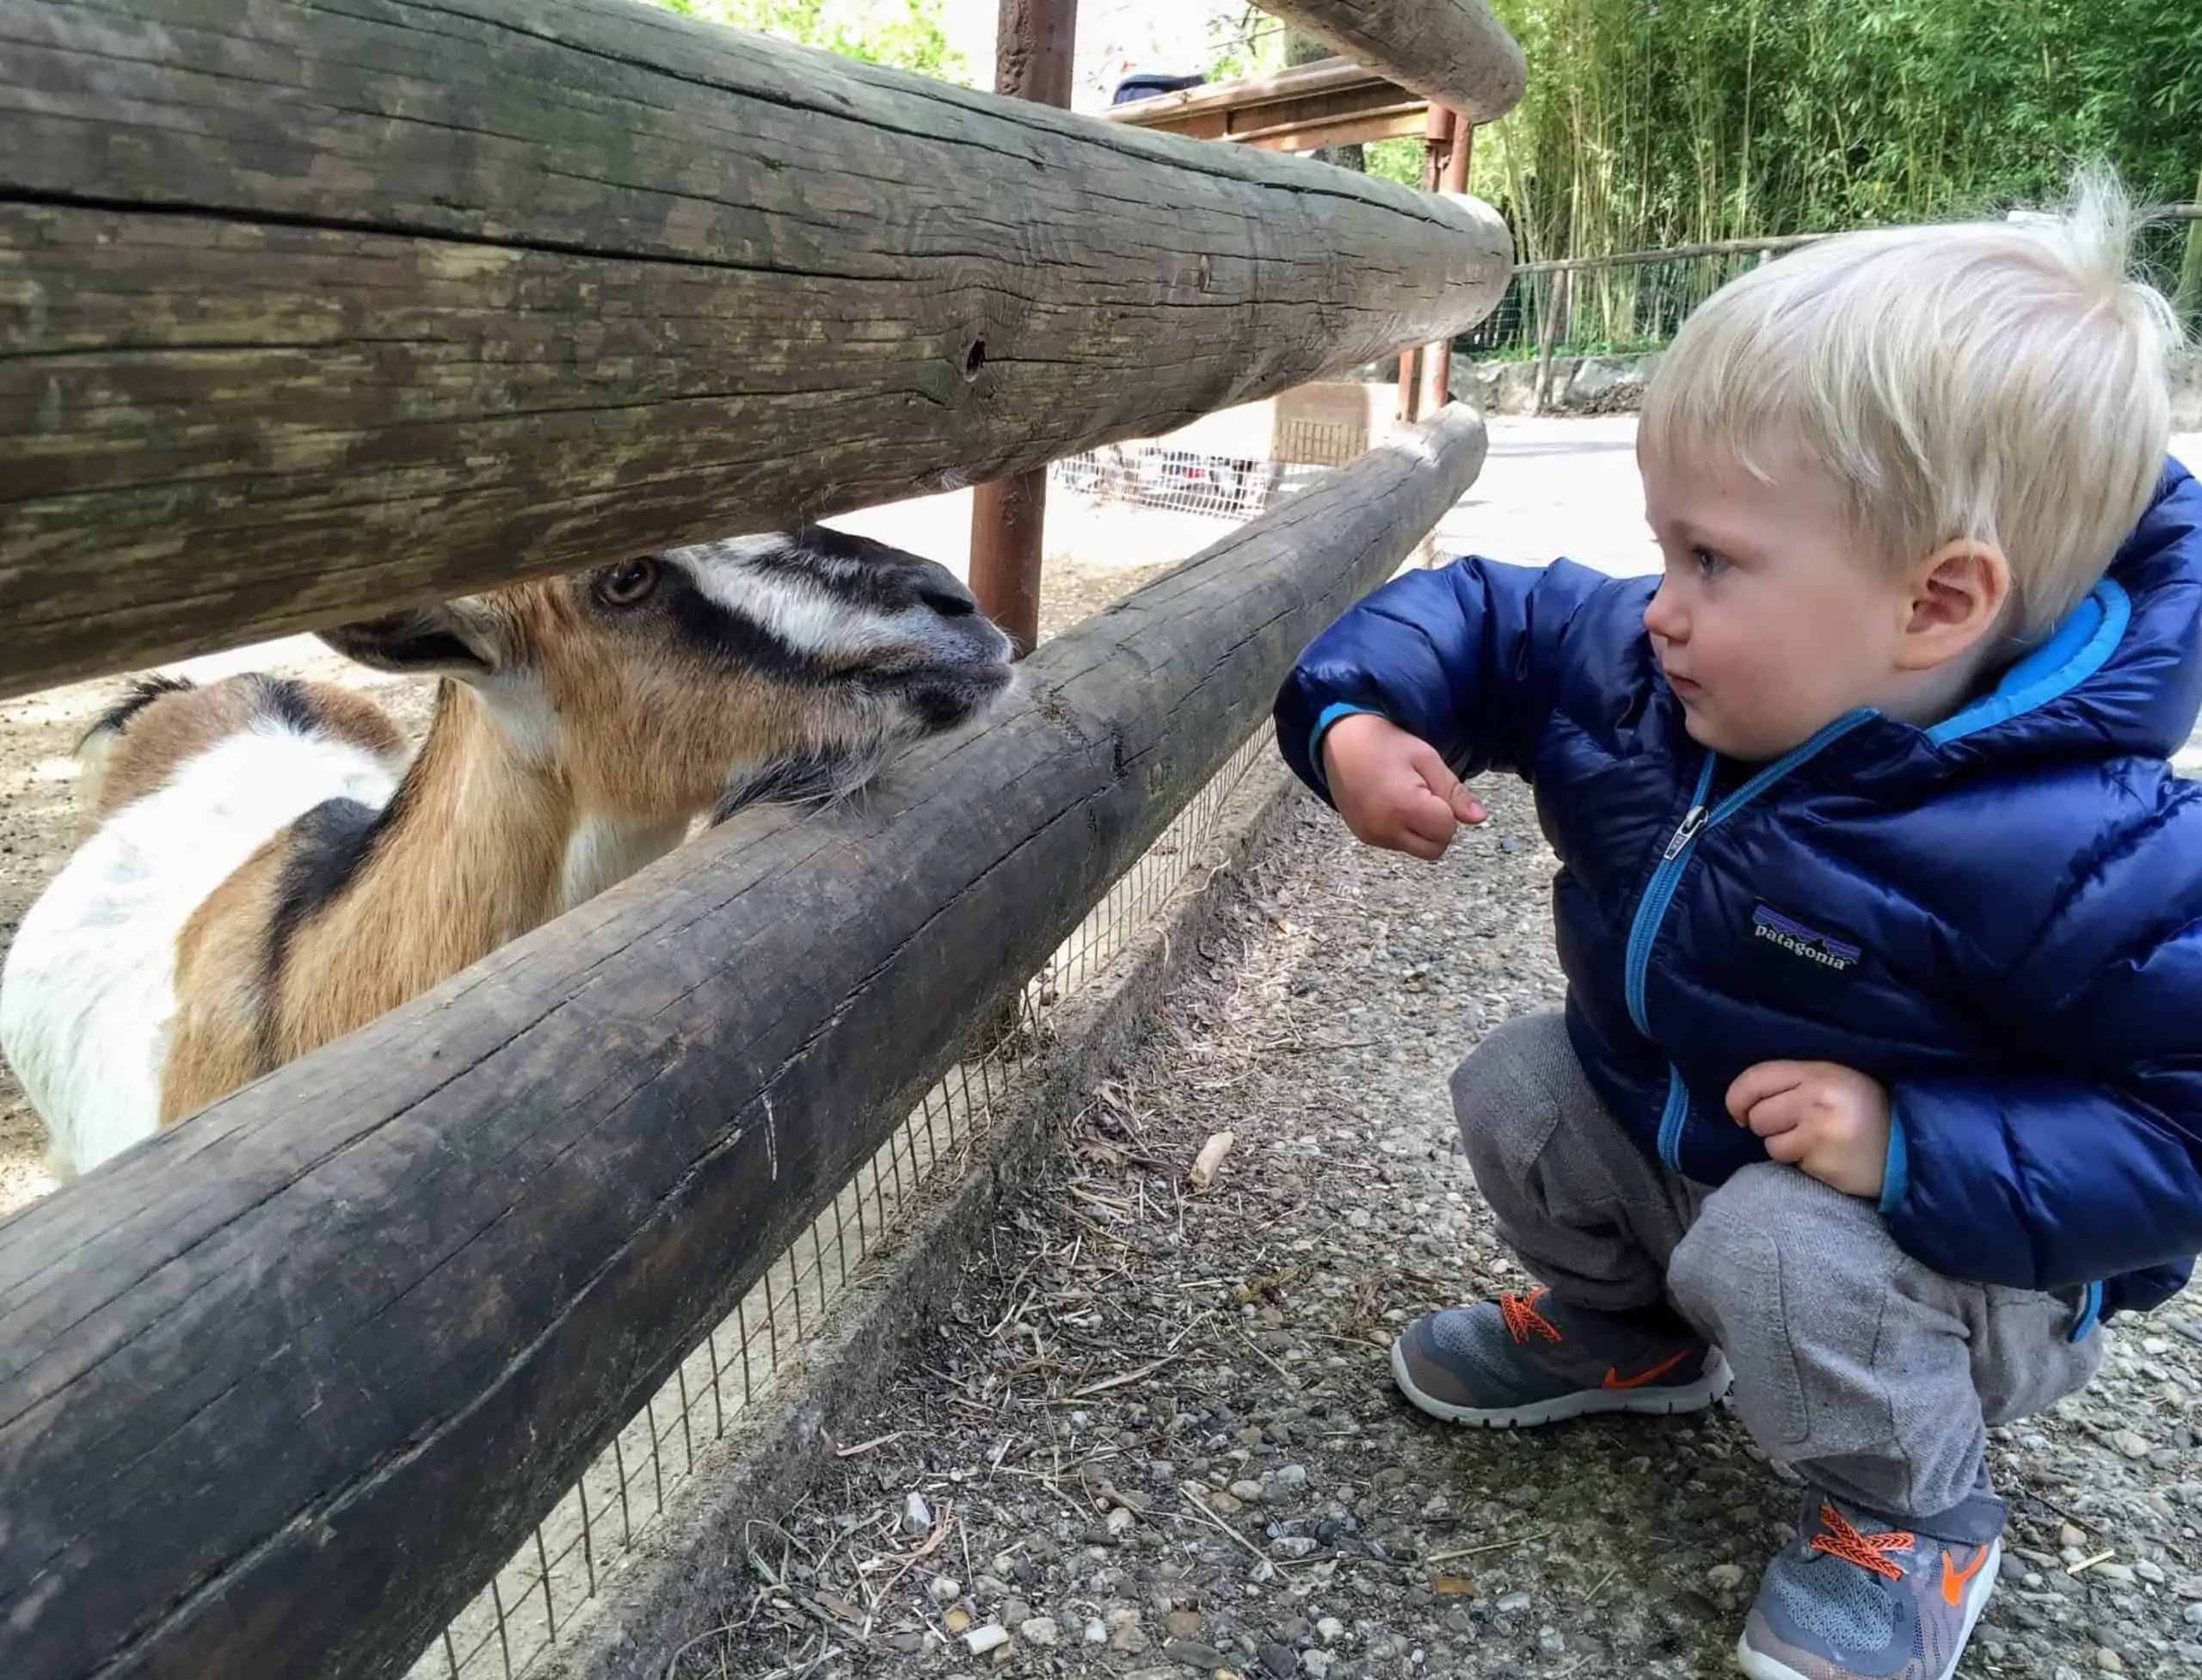 boy feeding goat at zoo di pistoia in italy